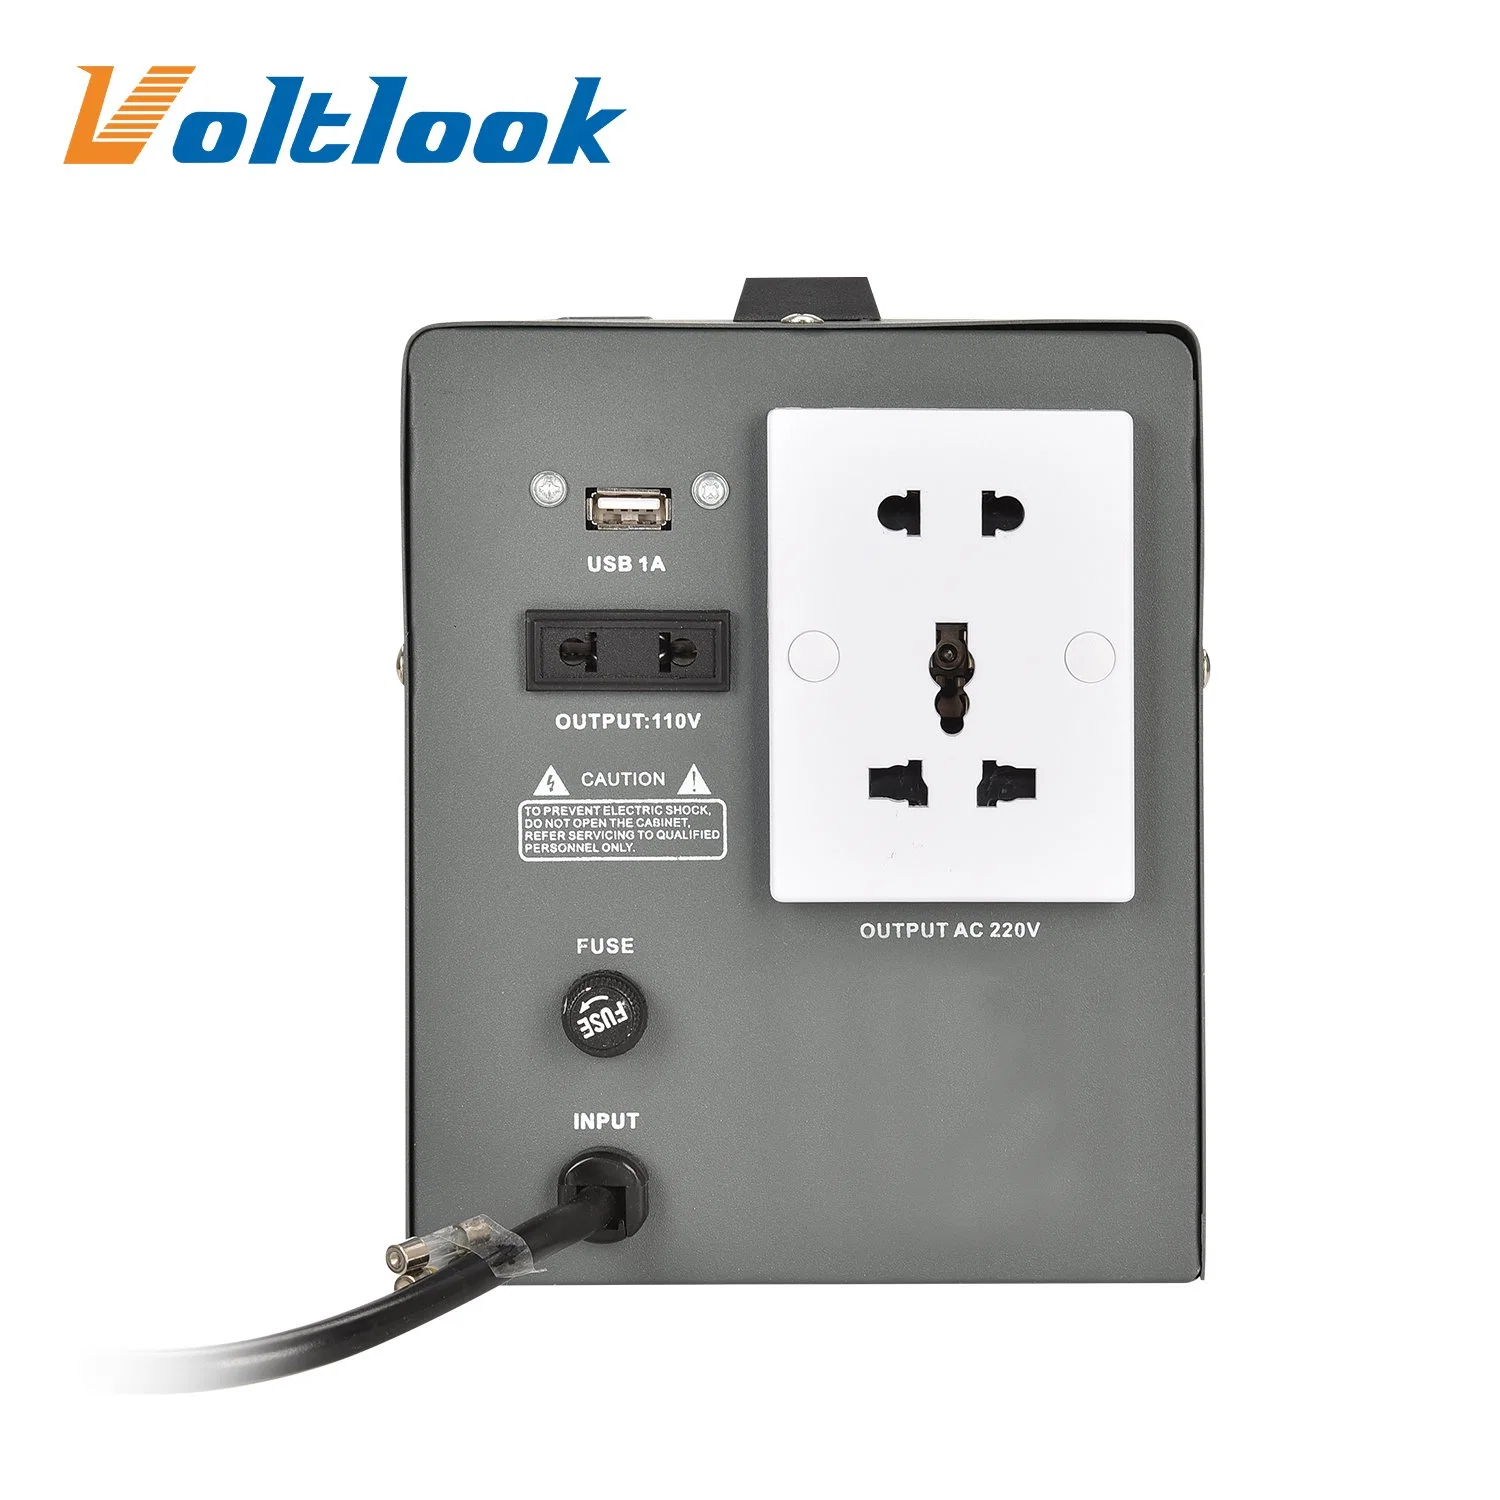 Akai Automatic Voltage Regulator 2000va Analog Meter Relay Type with USB